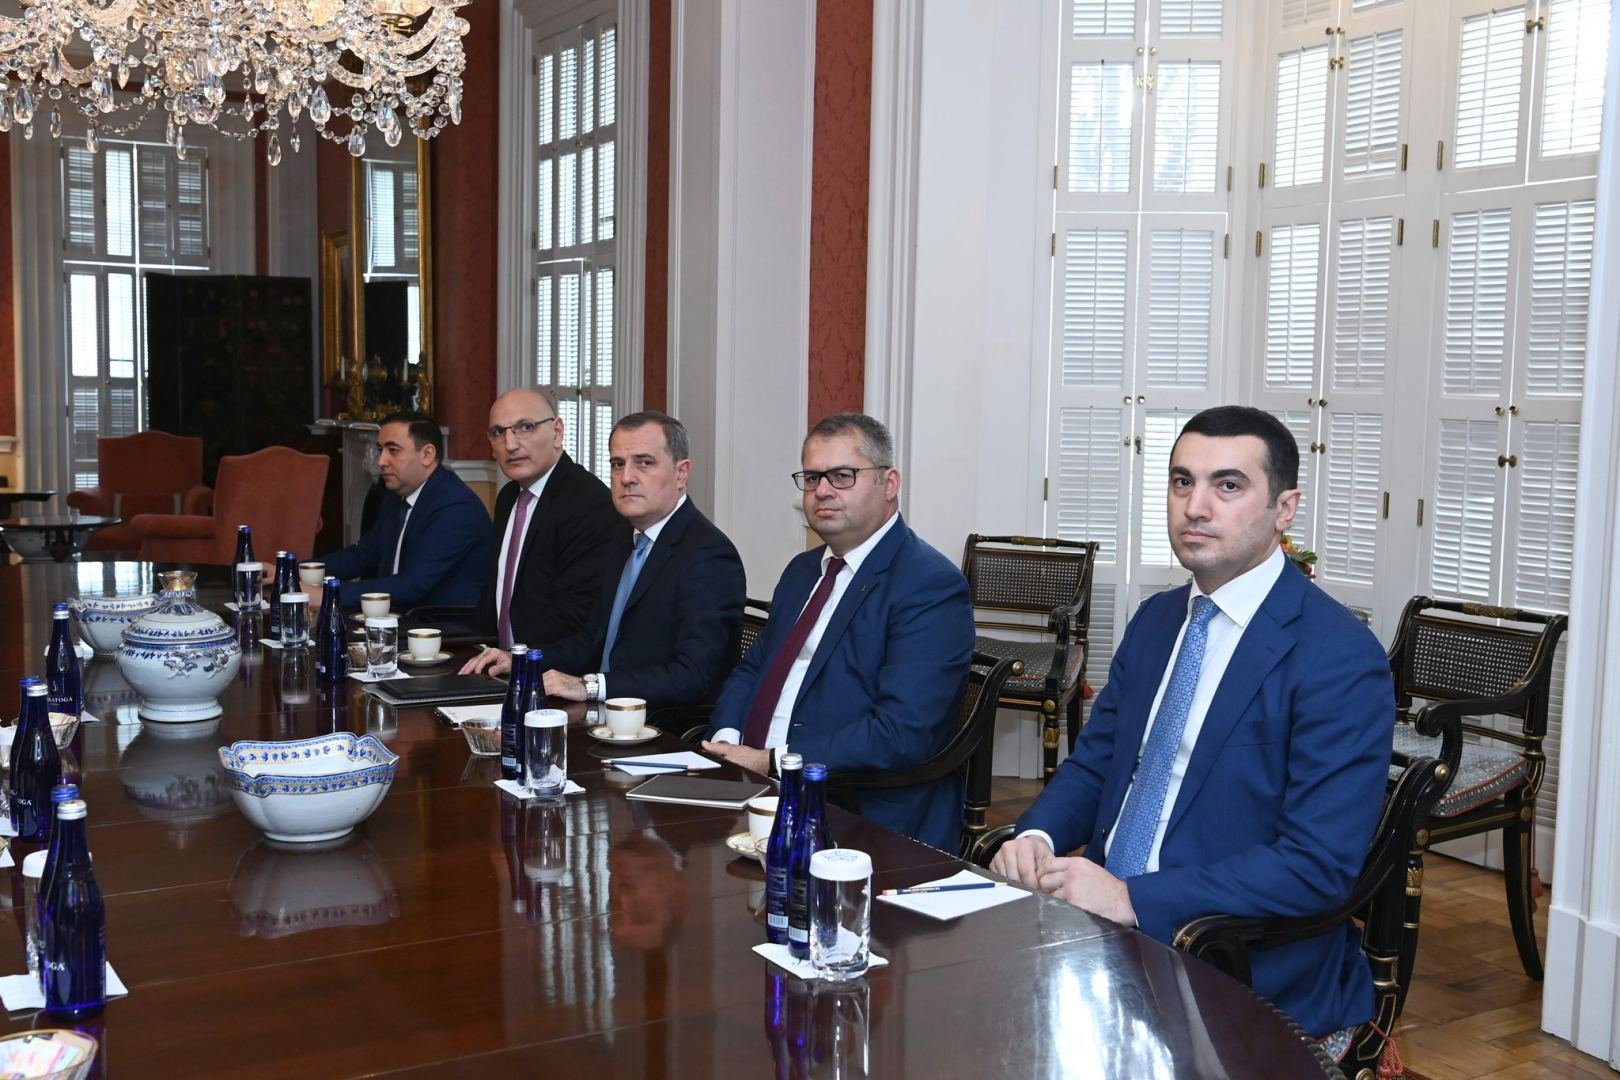 Meeting of FMs of Azerbaijan and Armenia begins in Washington (PHOTO)